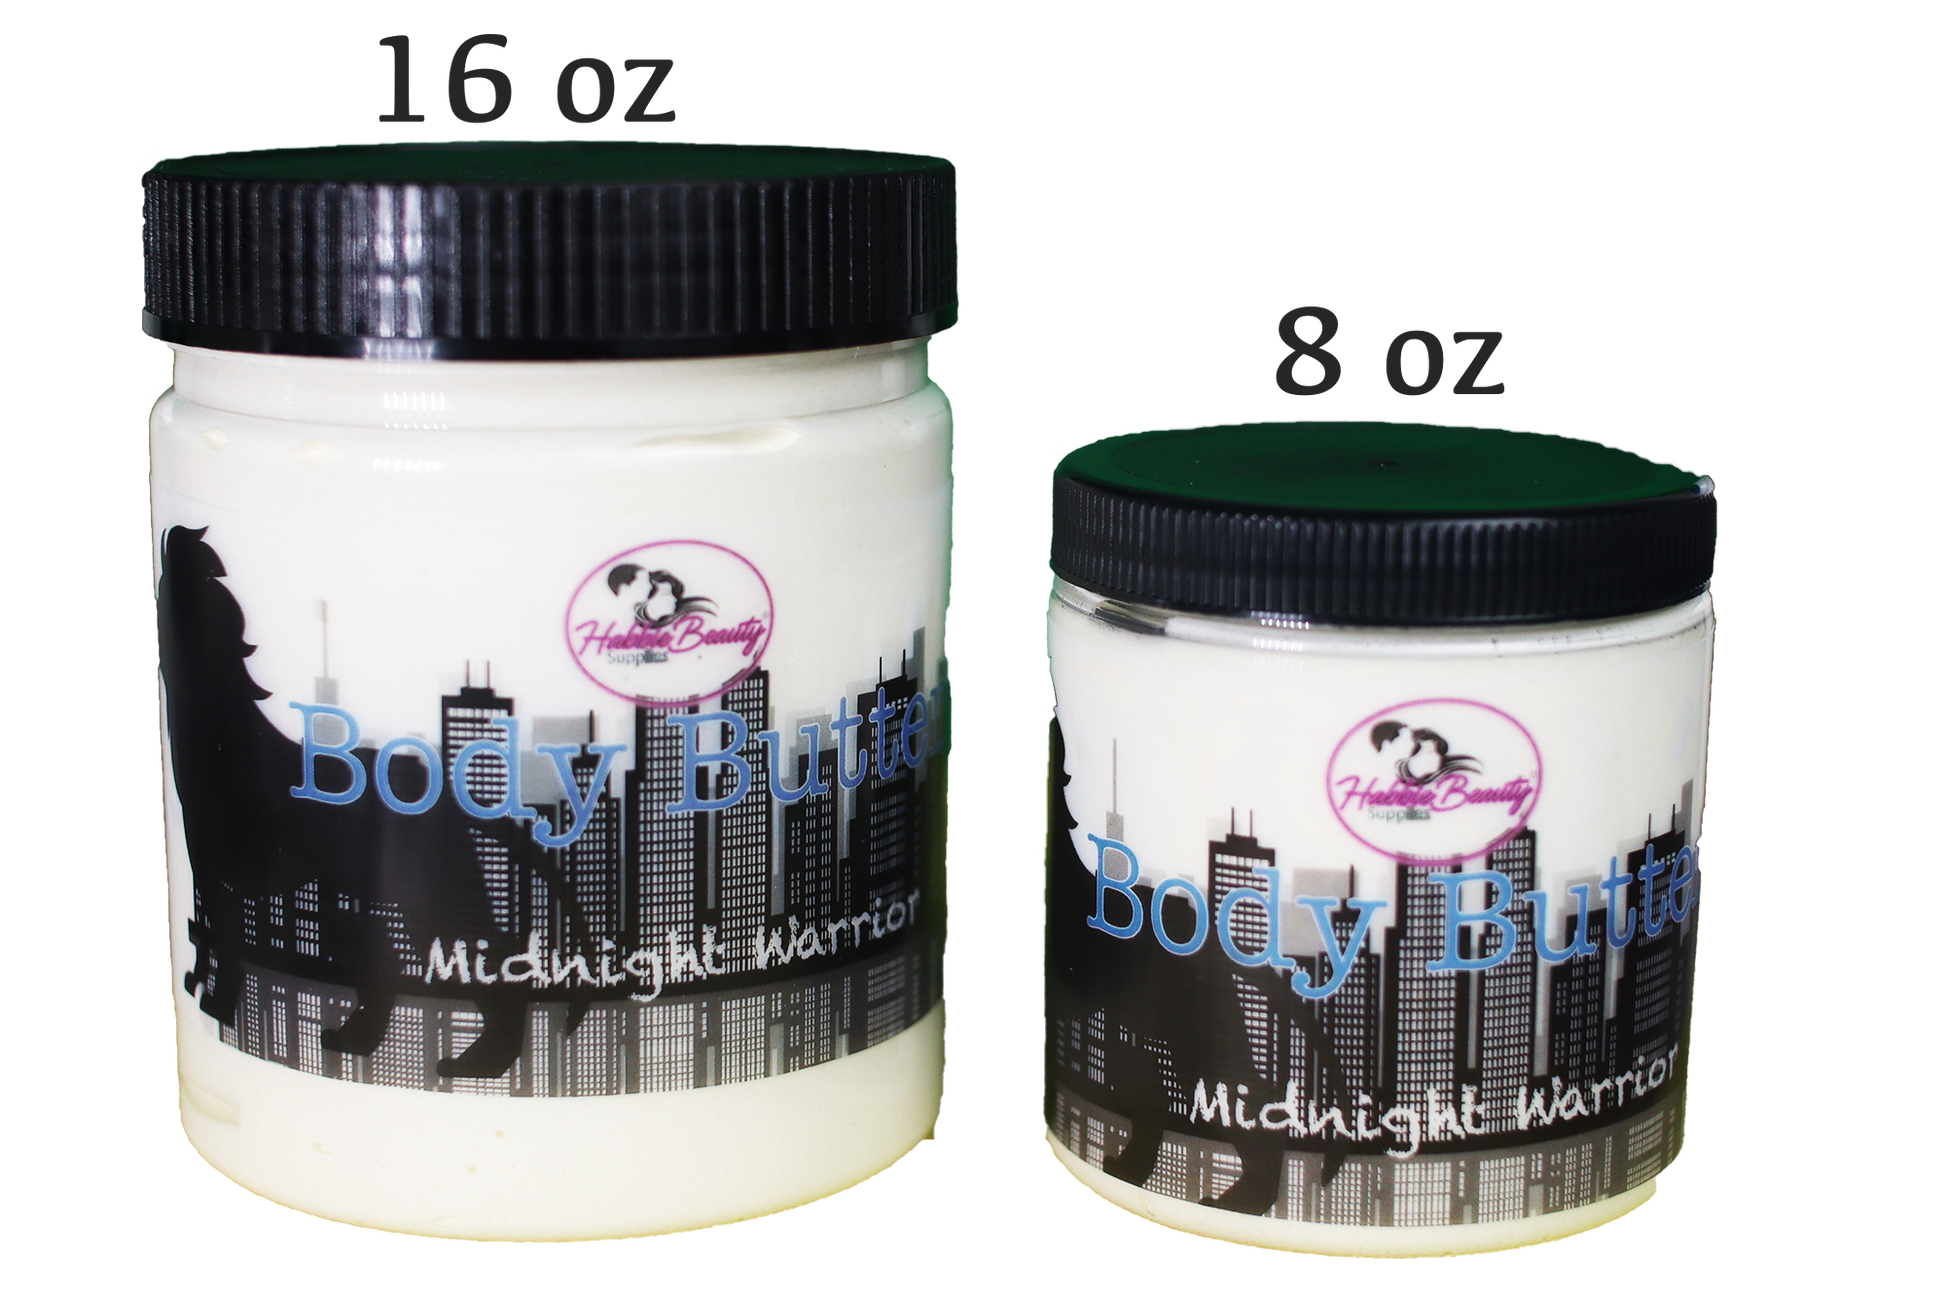 Whipped Body Butter 100% Organic | Habbie Beauty Supplies - Habbie Enterprise